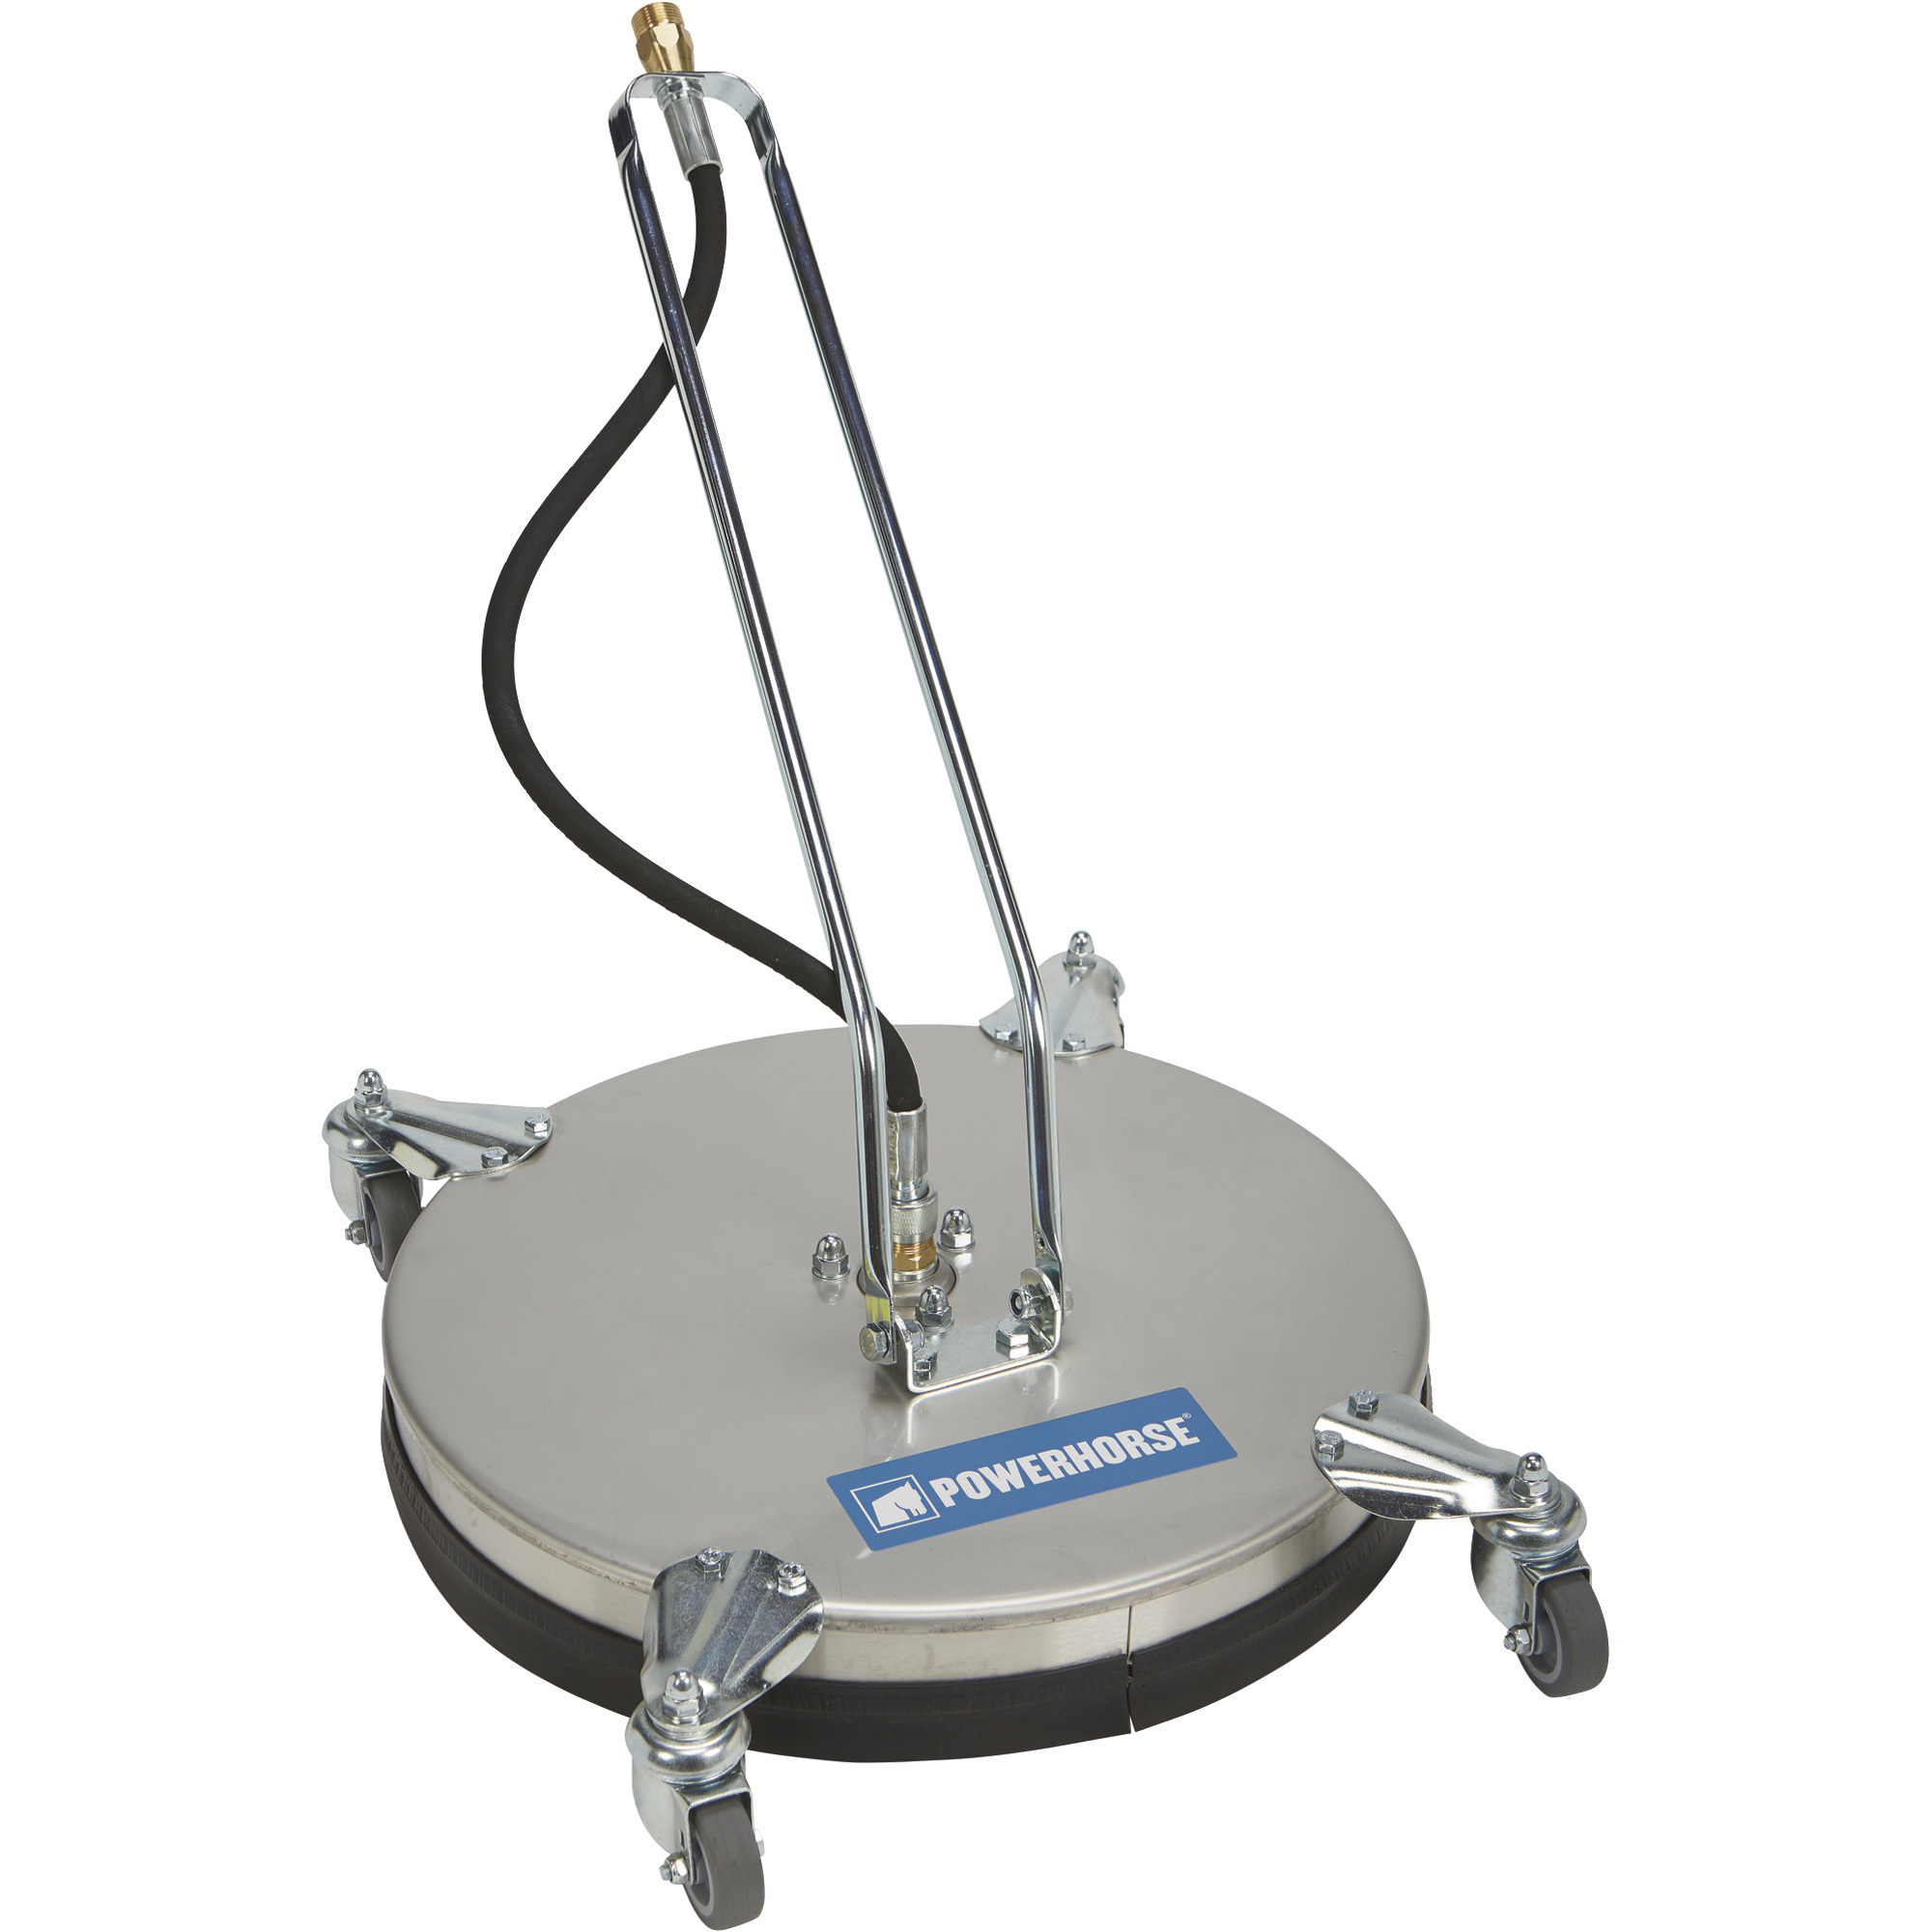 Powerhorse Pressure Washer Surface Cleaner, 16Inch Diameter, 3500 PSI, 5 GPM